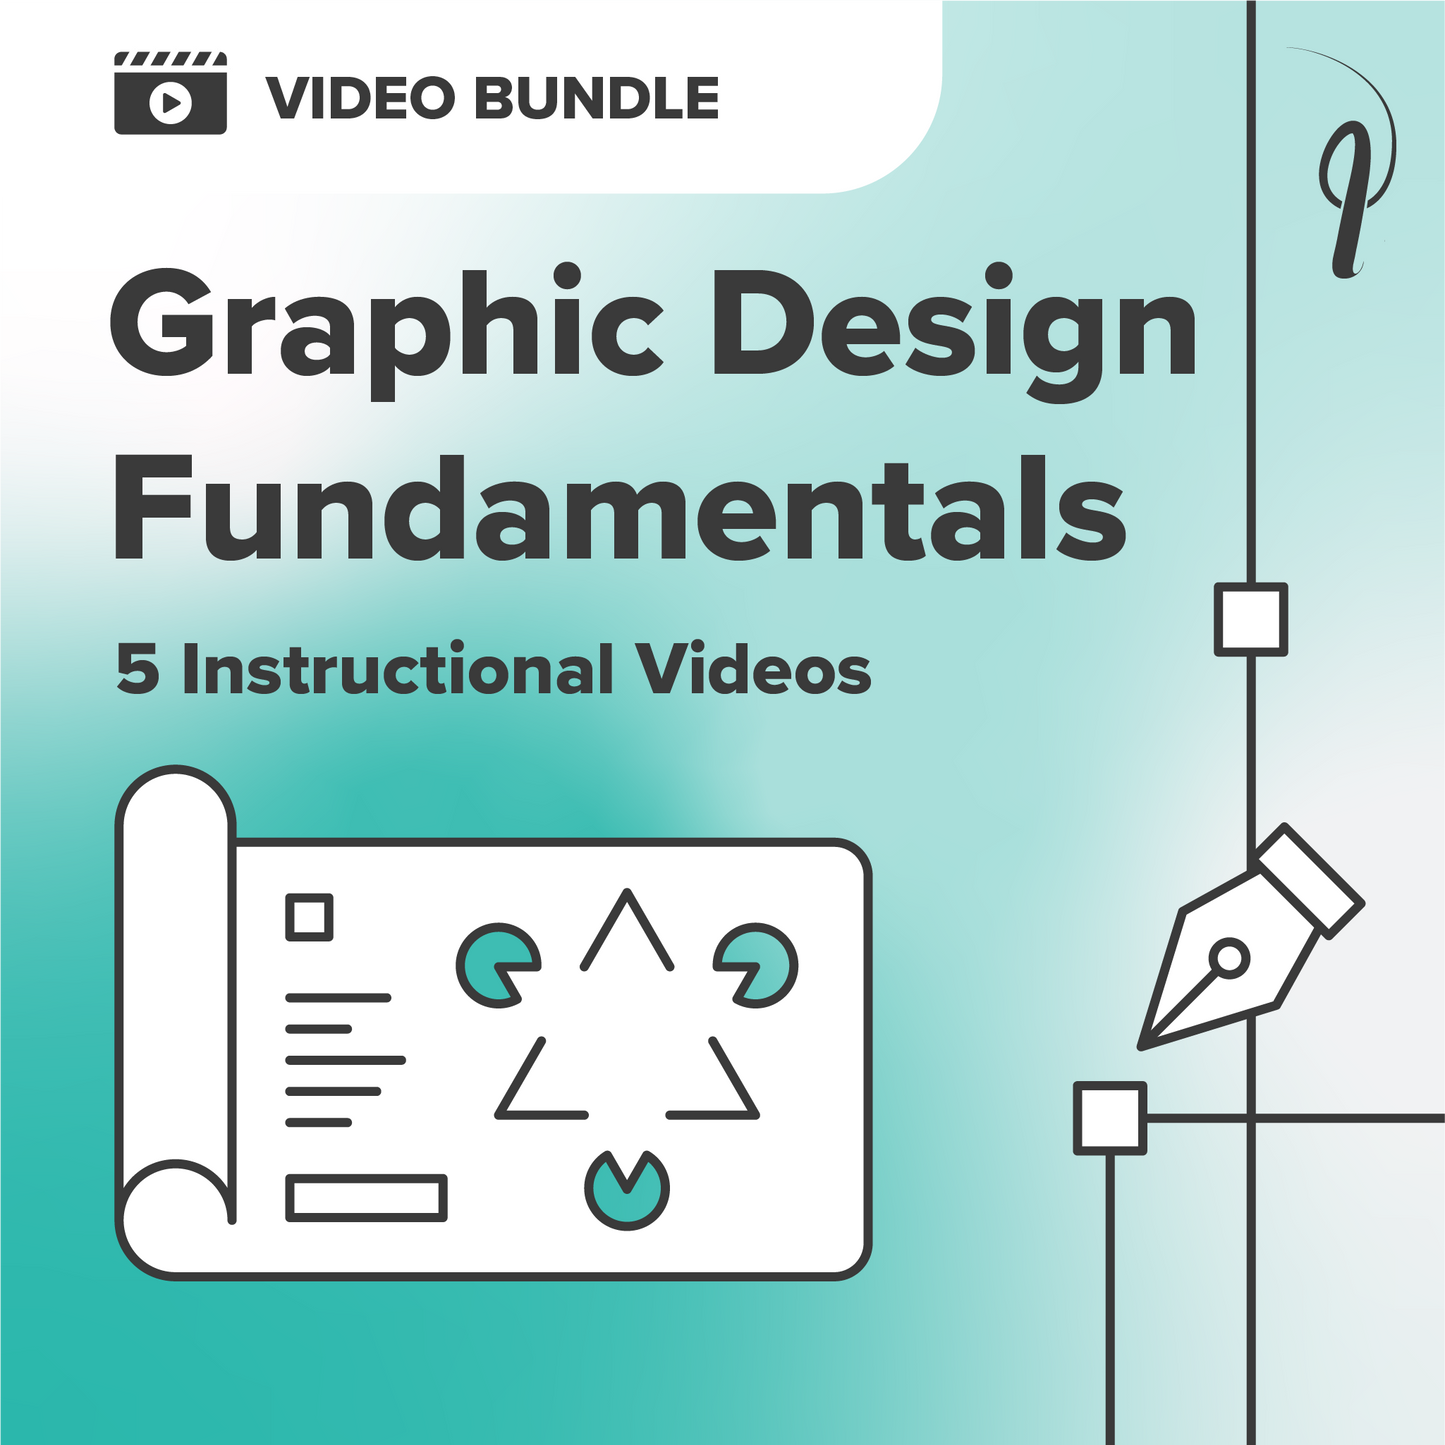 Graphic Design Fundamentals Video Bundle (All 5 Lessons)